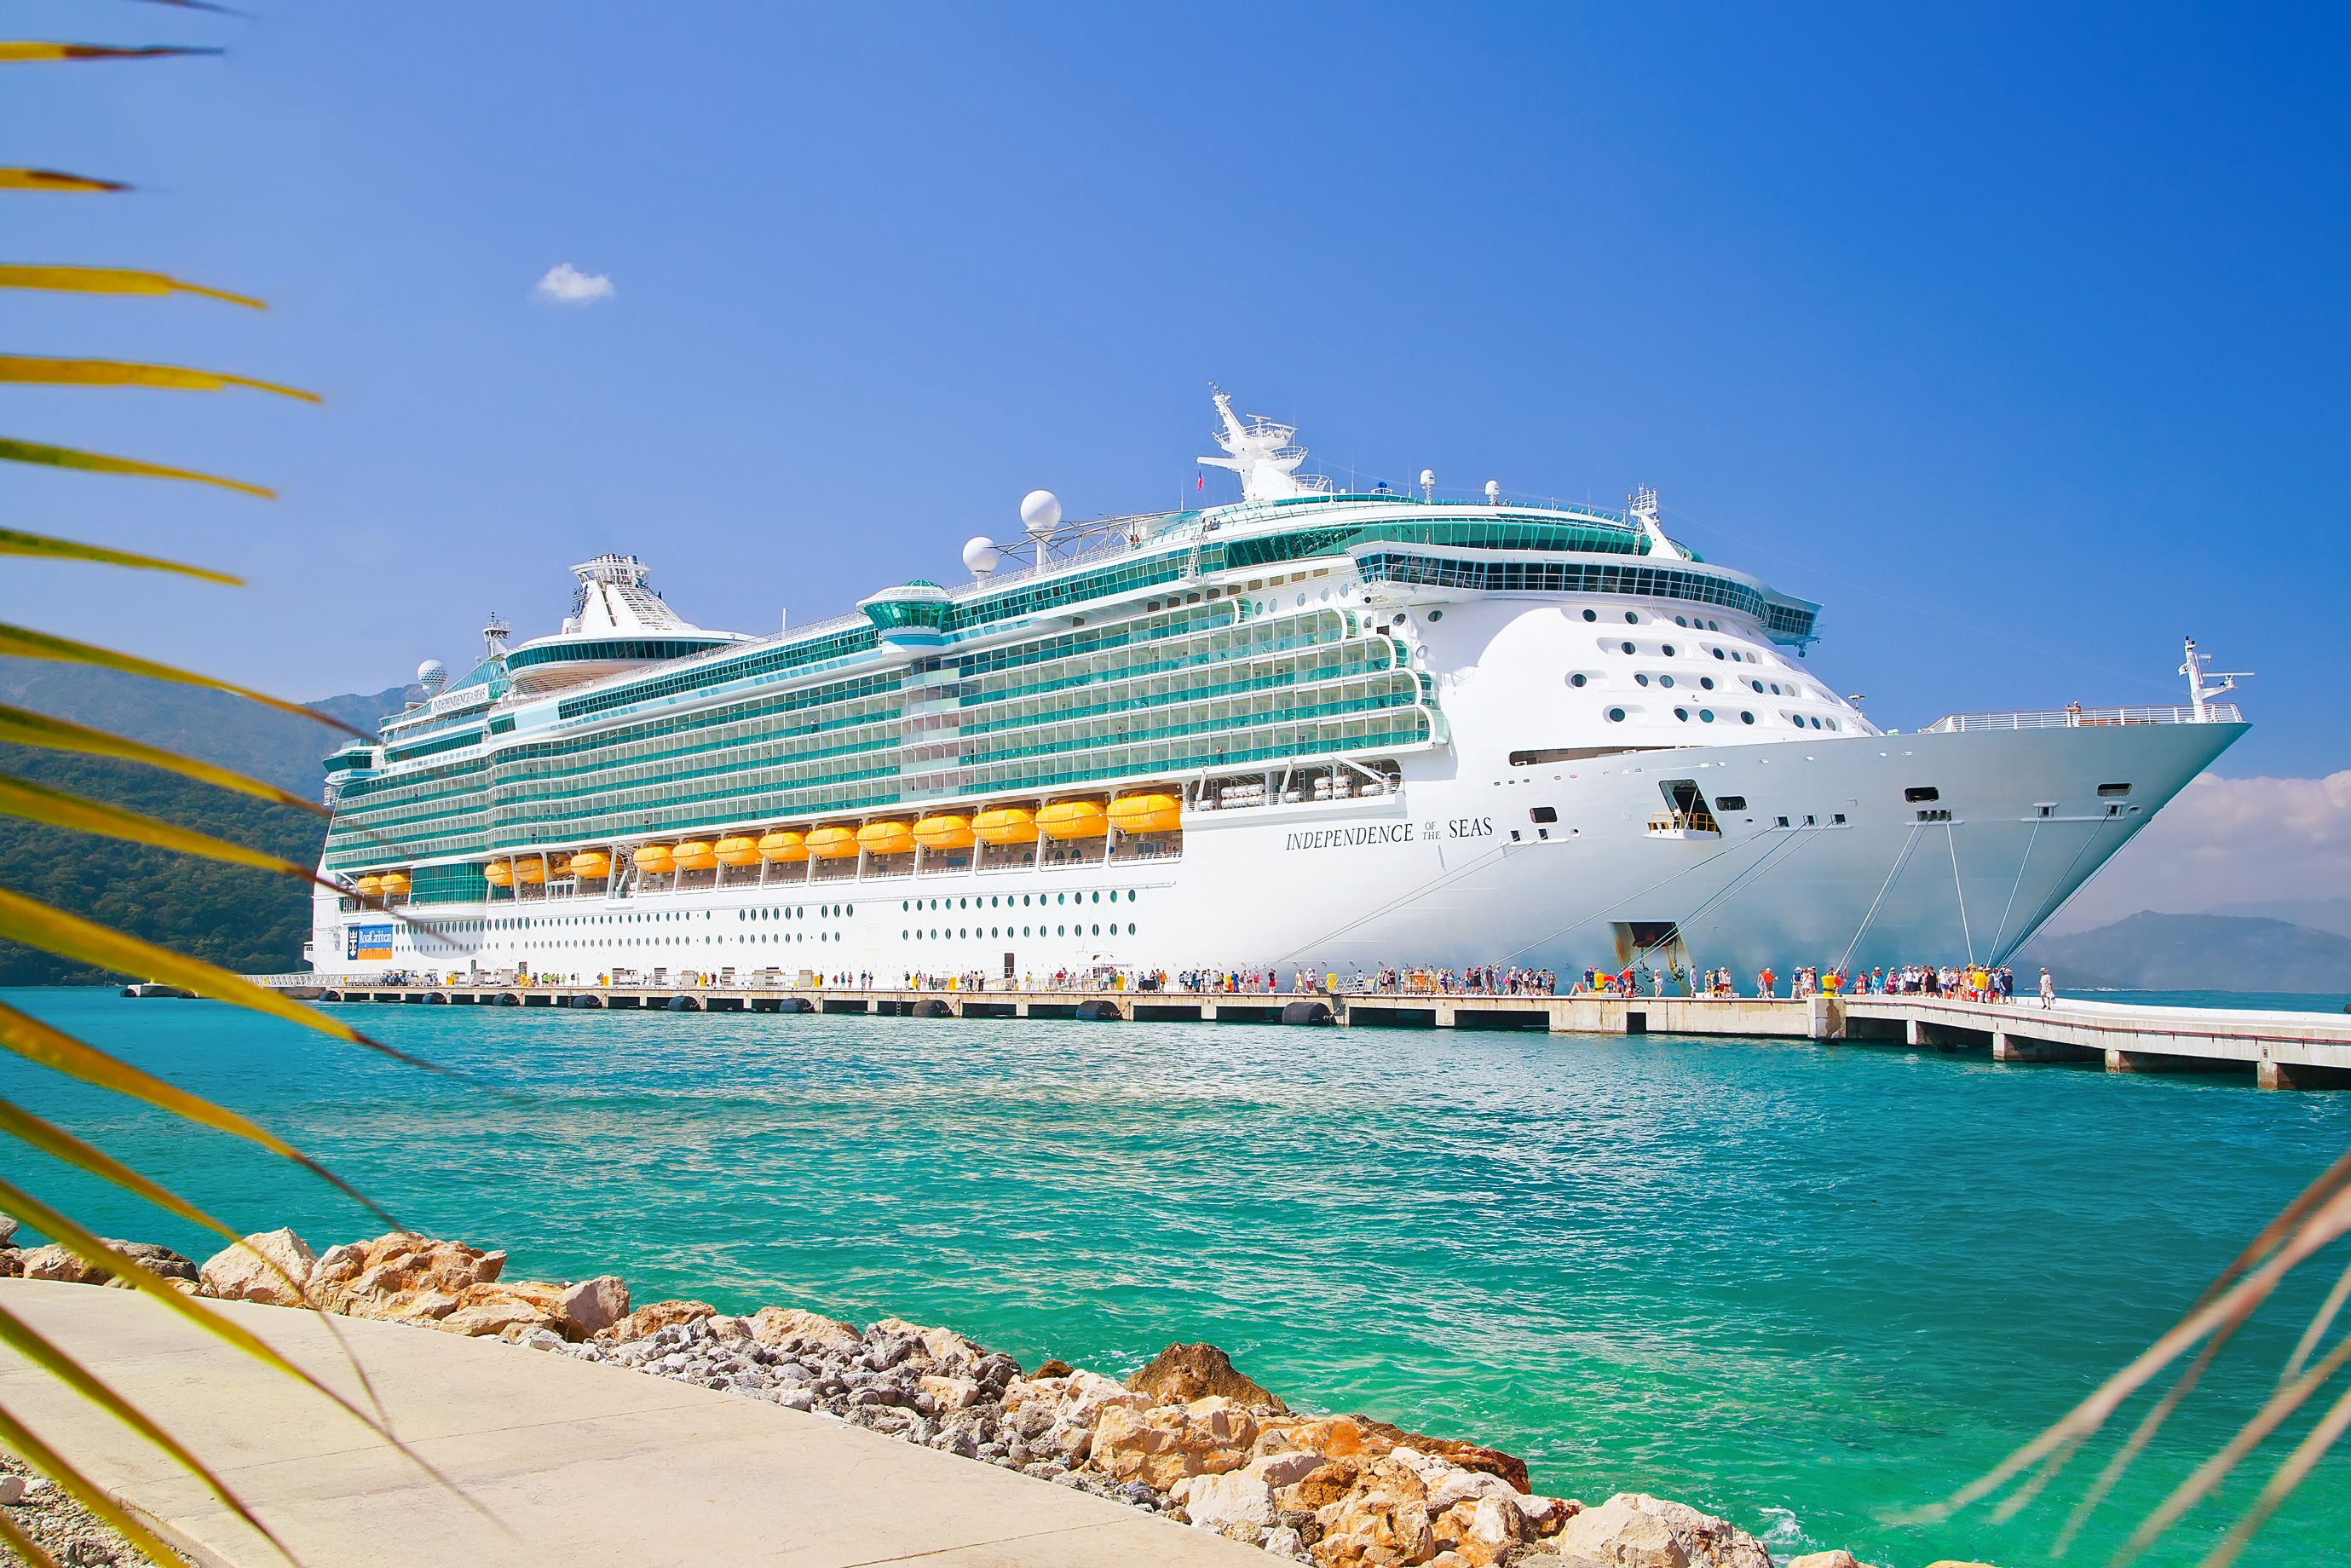 Royal Caribbean Cruise Ship on a port